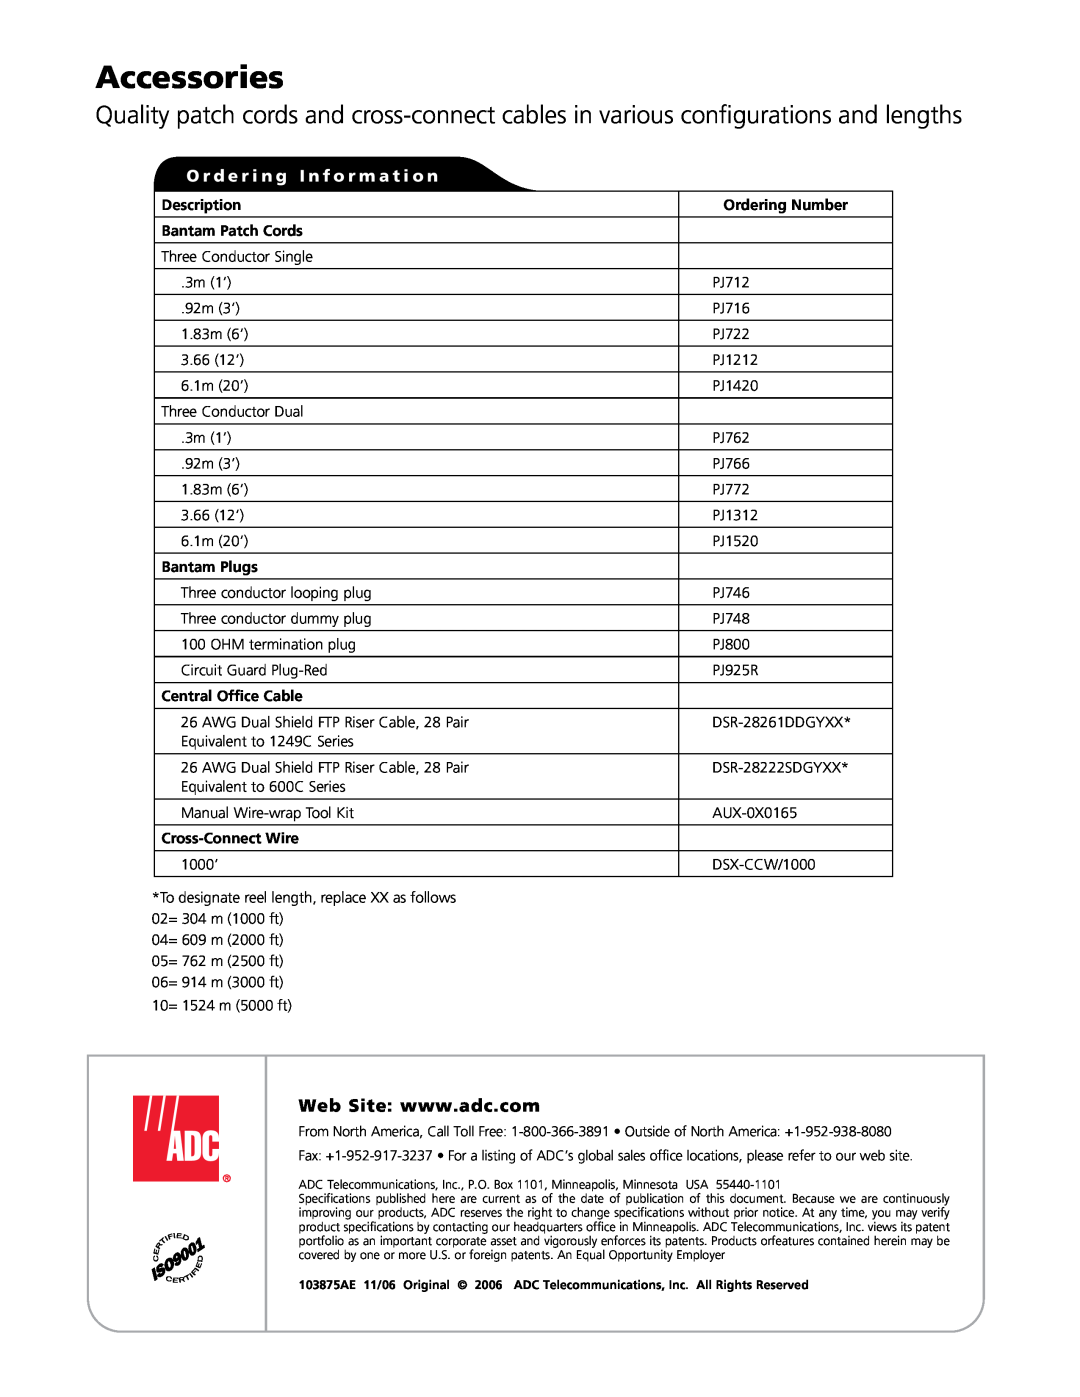 ADC DSXi dimensions Accessories, Description, Ordering Number, Bantam Patch Cords, Bantam Plugs, Central Office Cable 